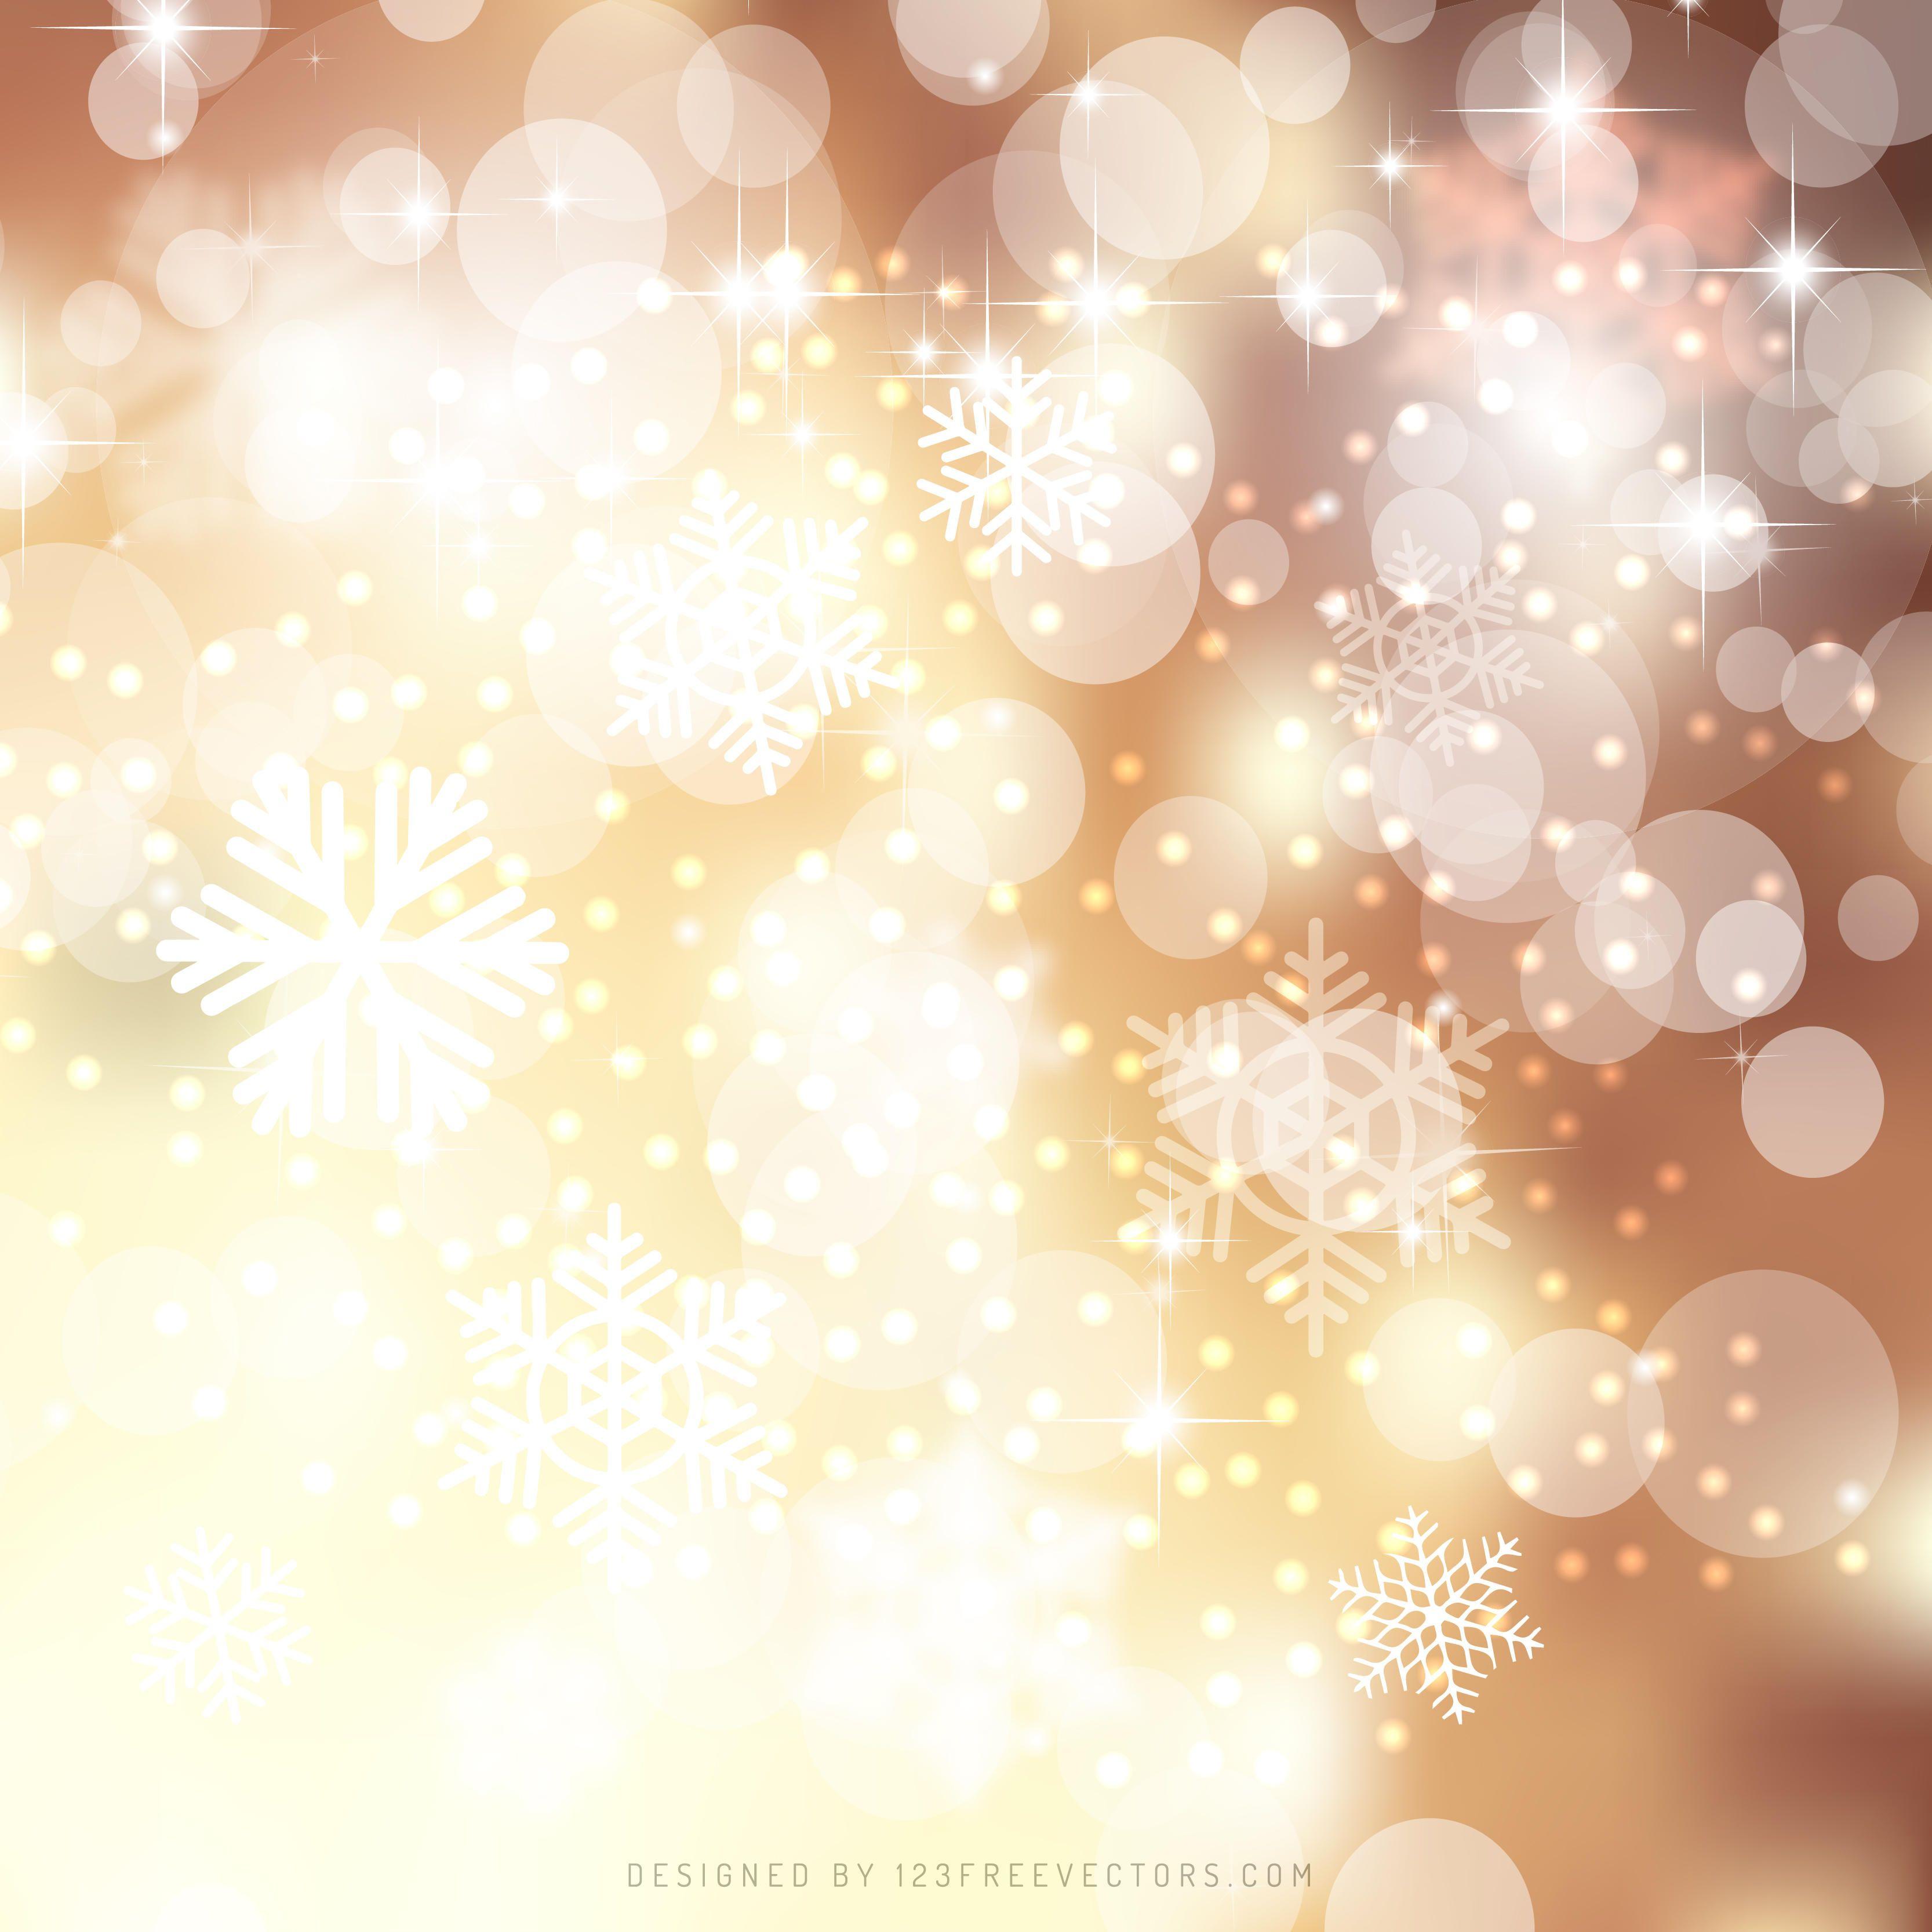 Light Brown Bokeh Christmas Lights Background DesignFreevectors